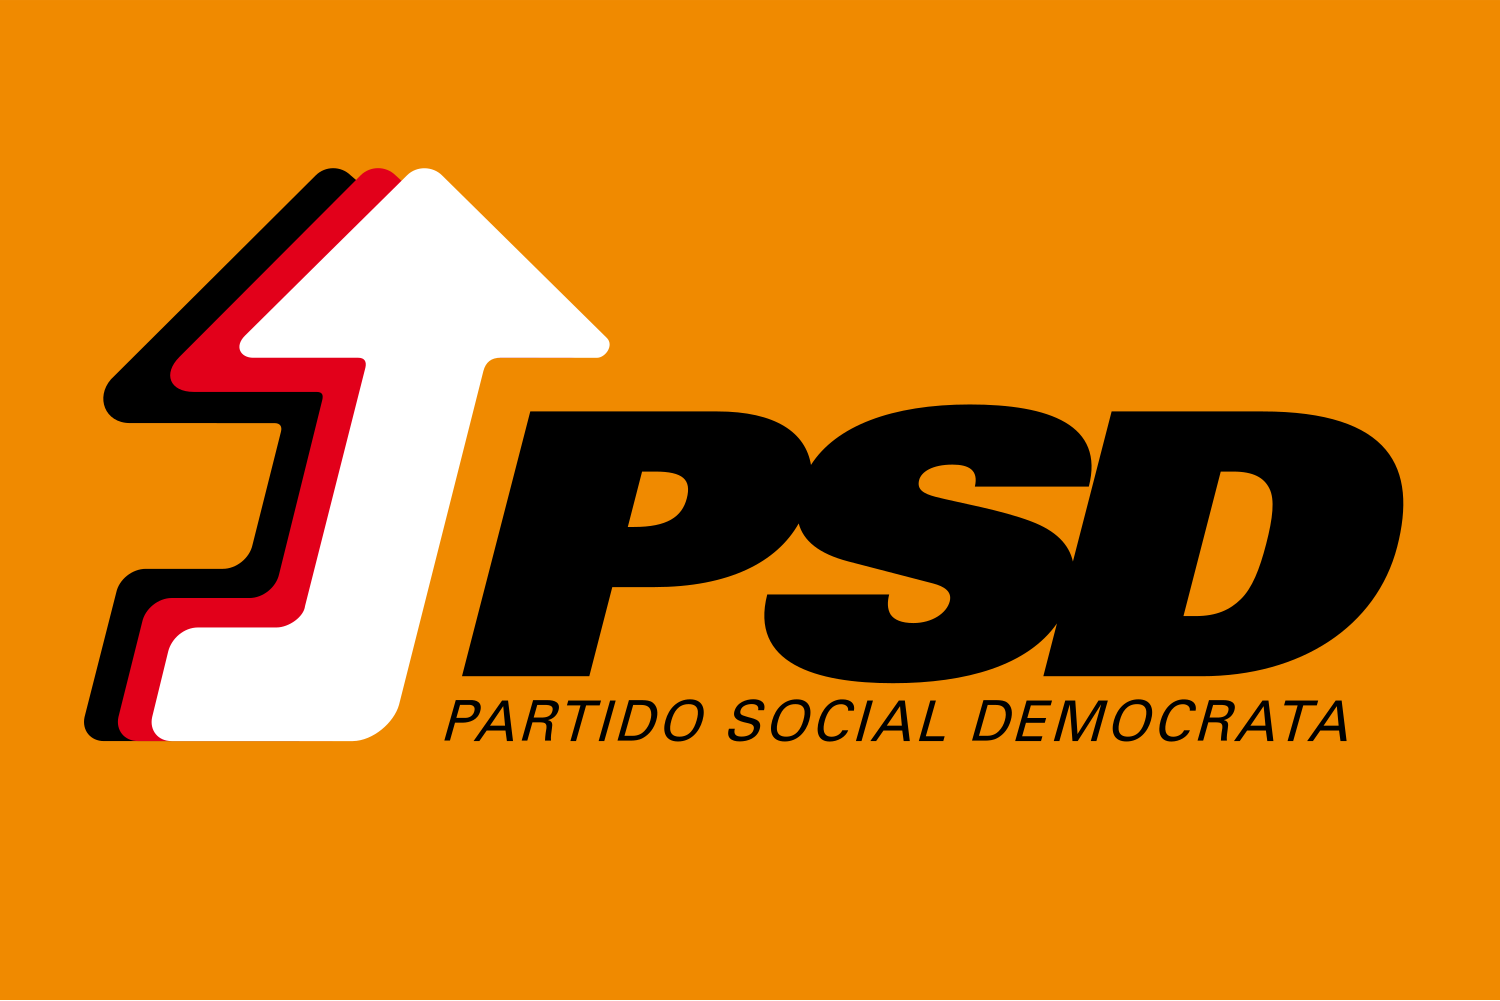 Coalition PSD/CDS - Wikipedia